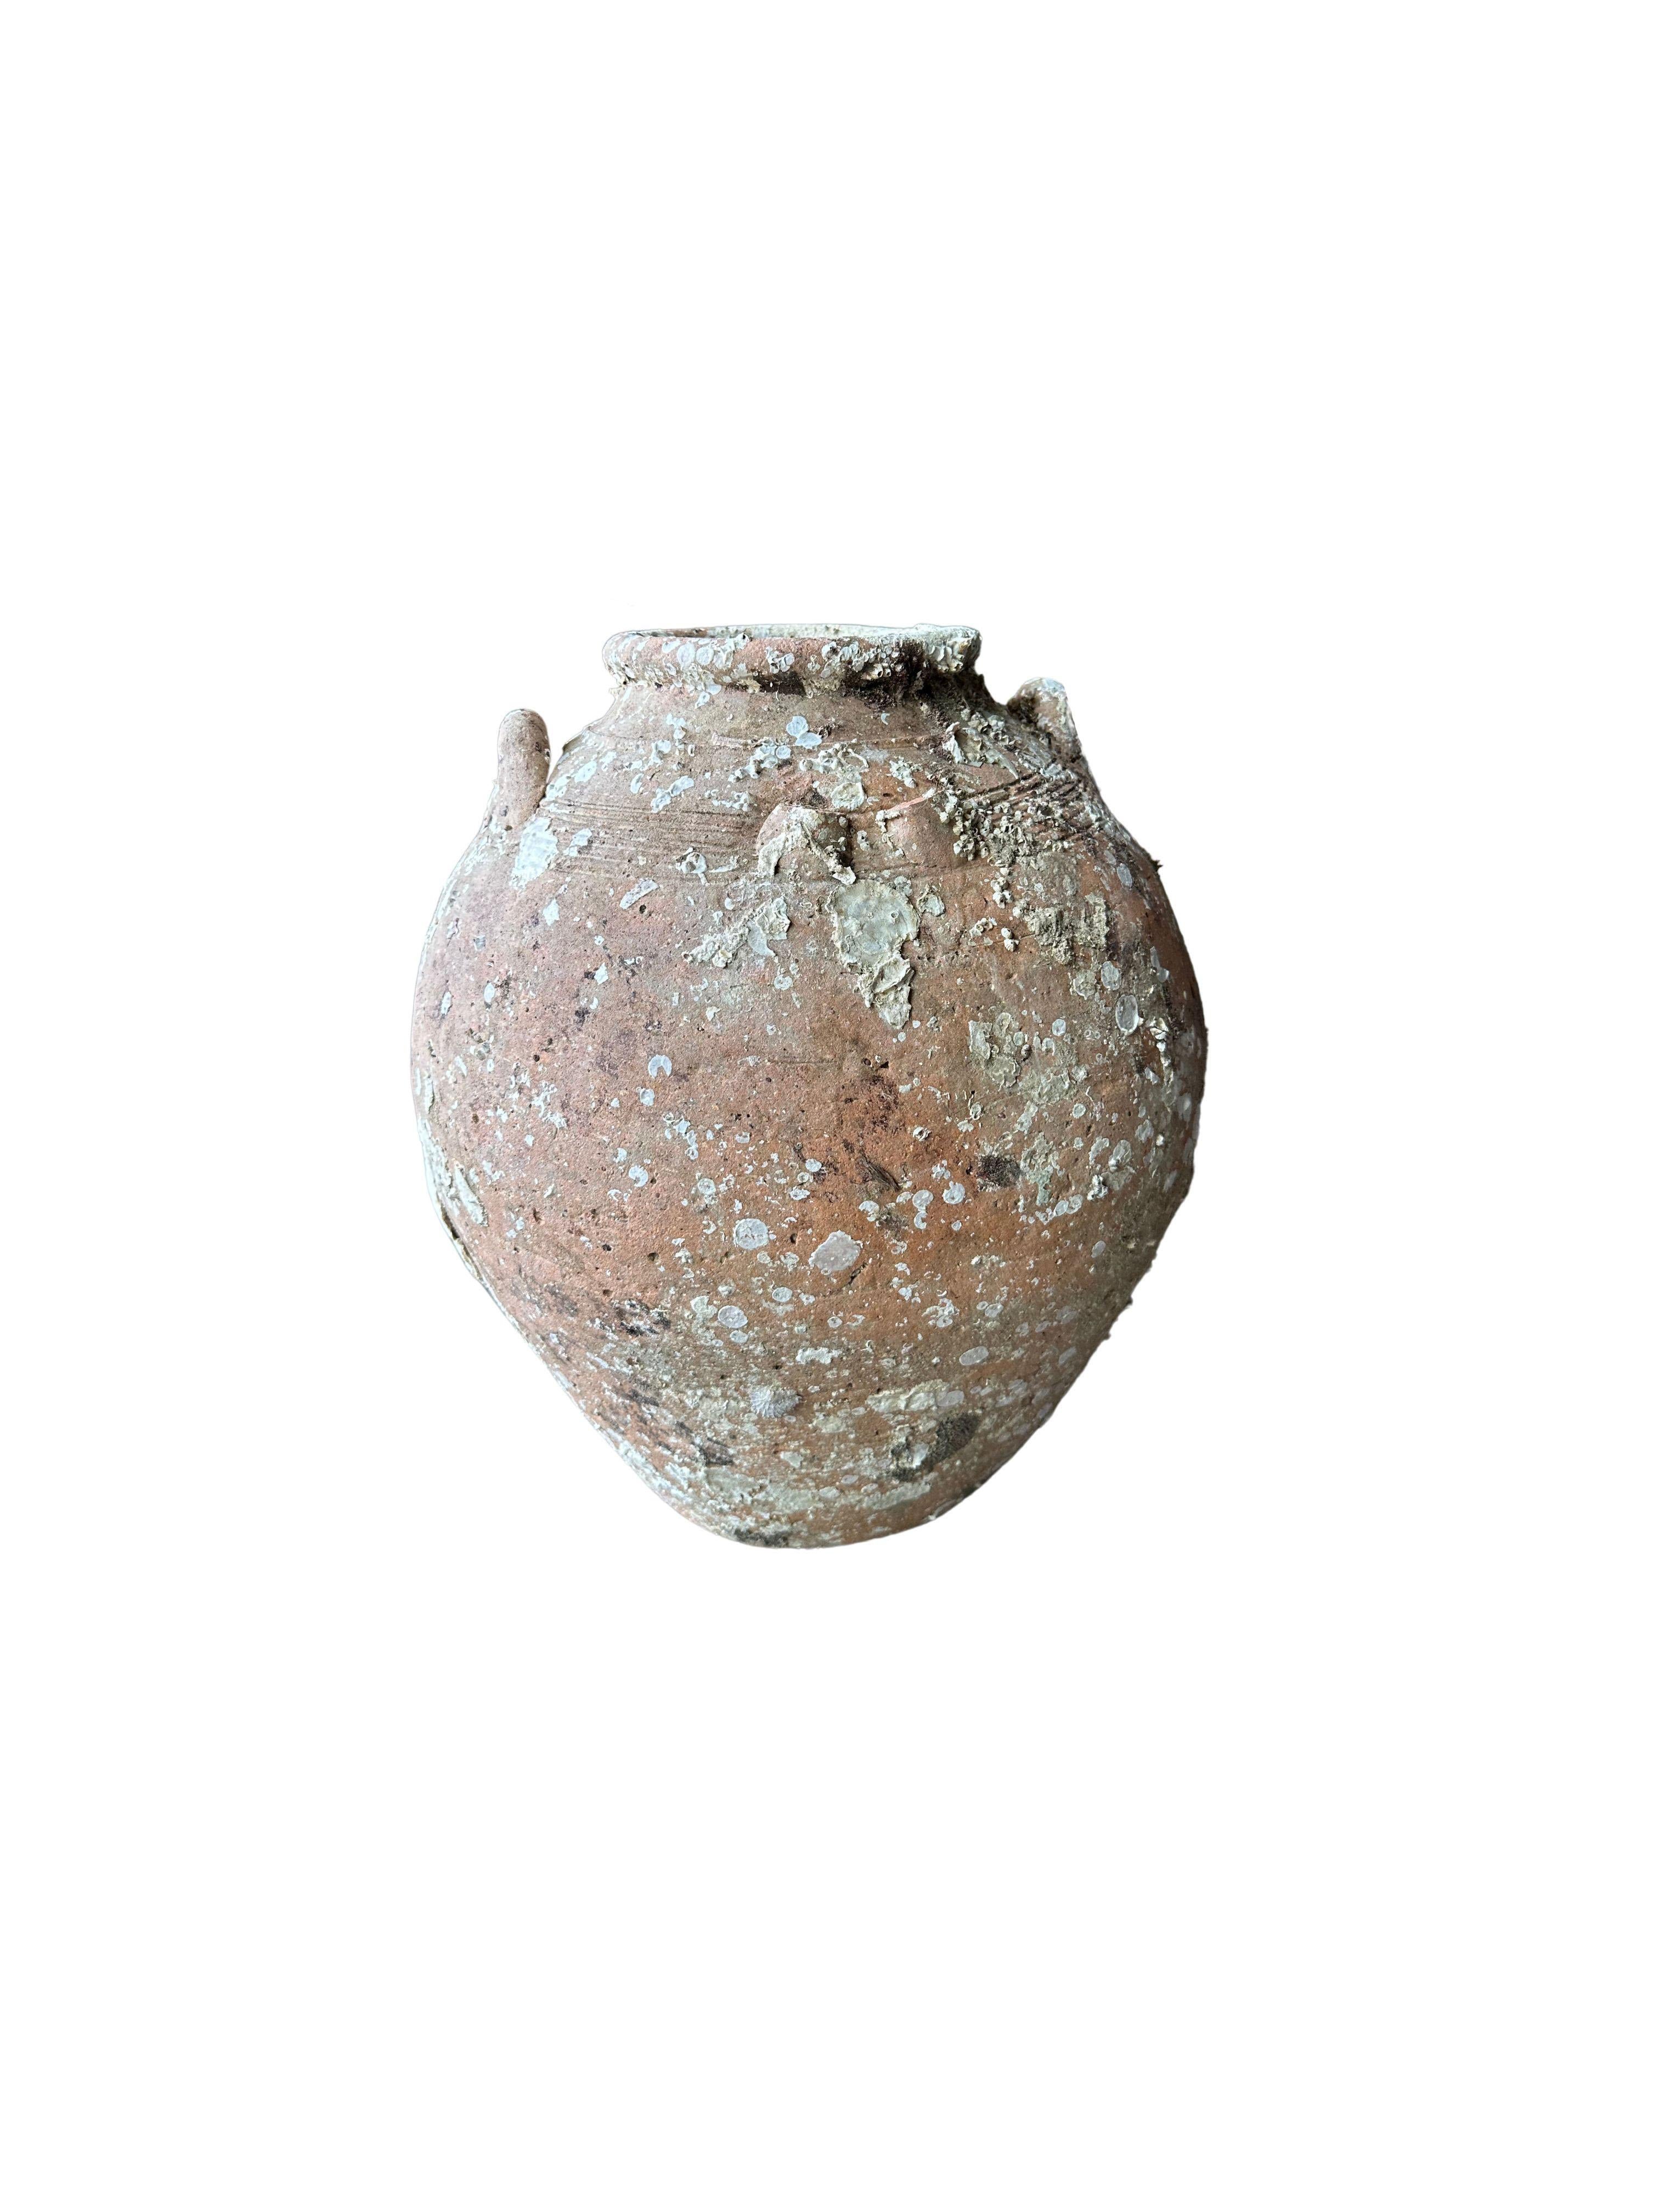 Hand-Crafted Singburi Shipwreck Jar from the Kingdom of Sukhothai, Thailand, 17th Century